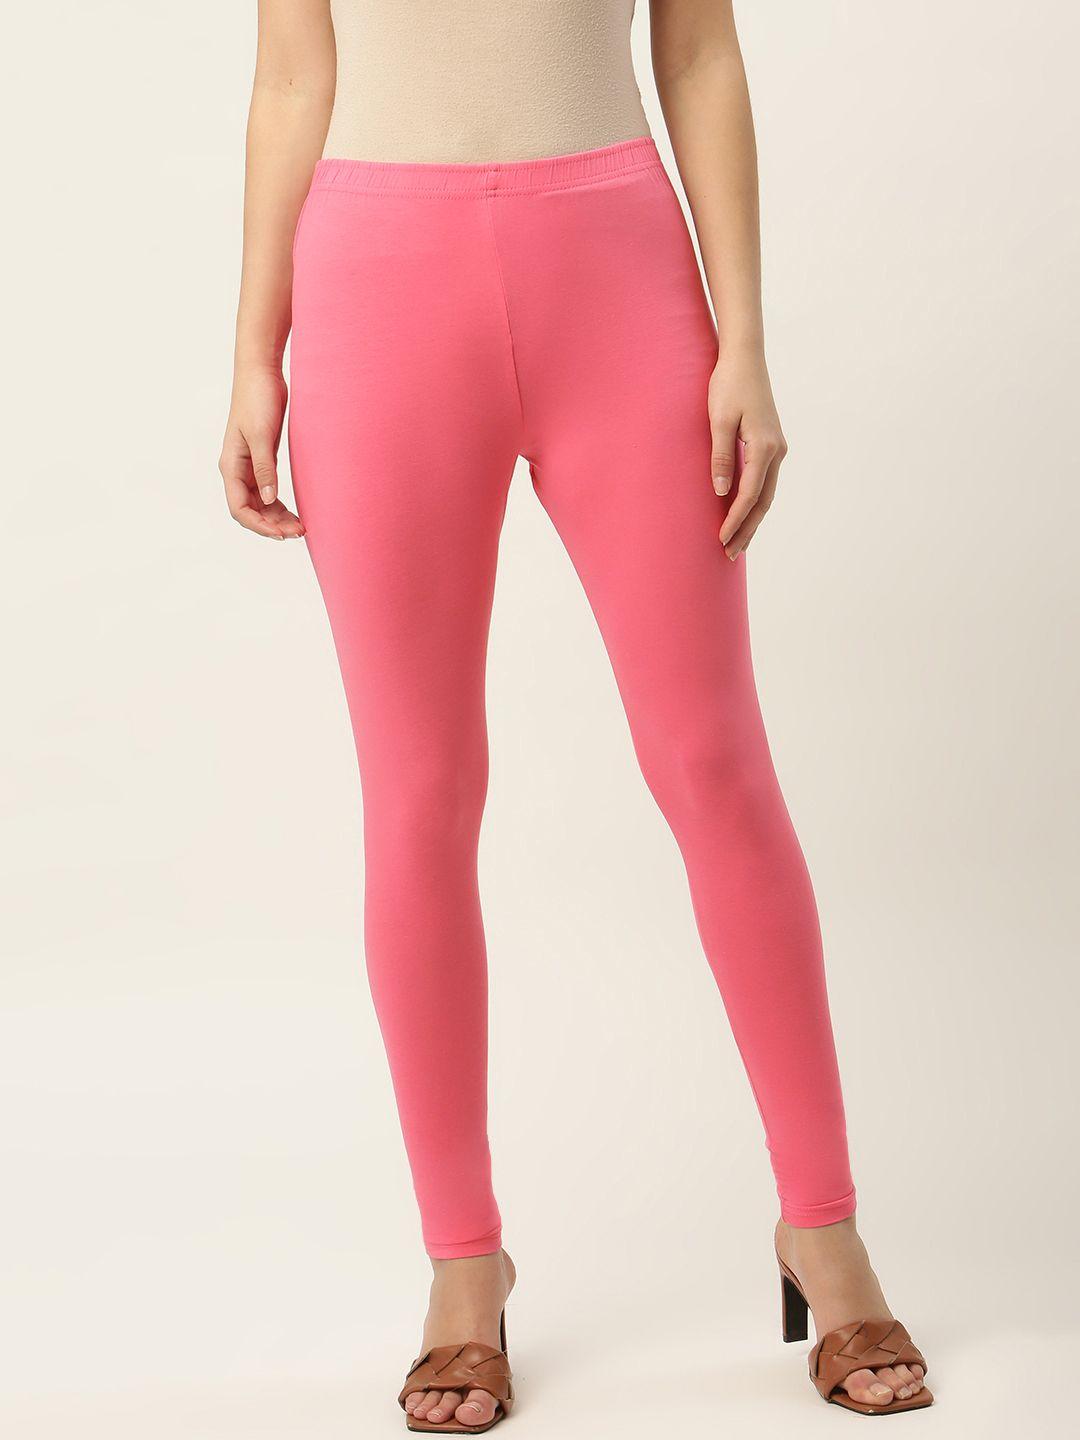 ms.lingies-women-pink-solid-ankle-length-leggings